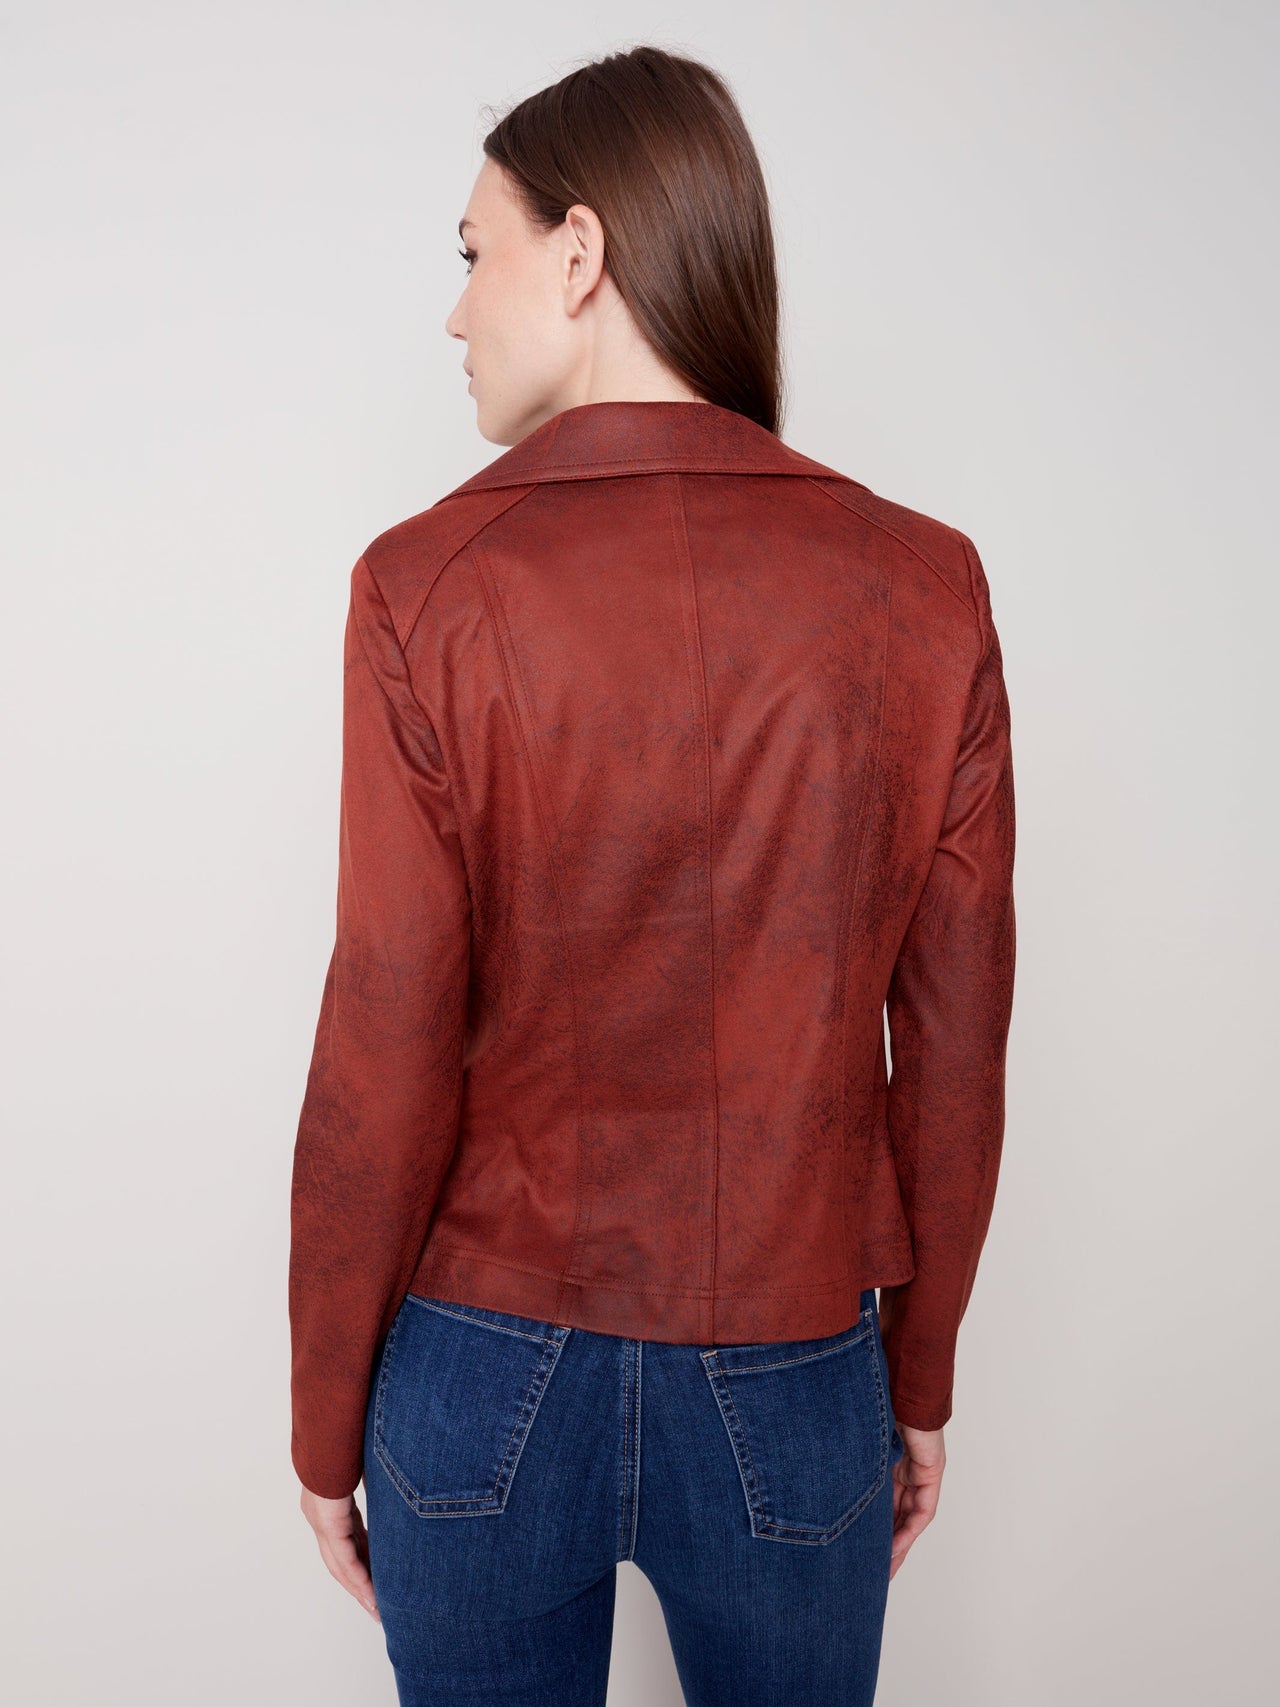 Vintage Faux Leather Jacket by Charlie B Charlie B Coat